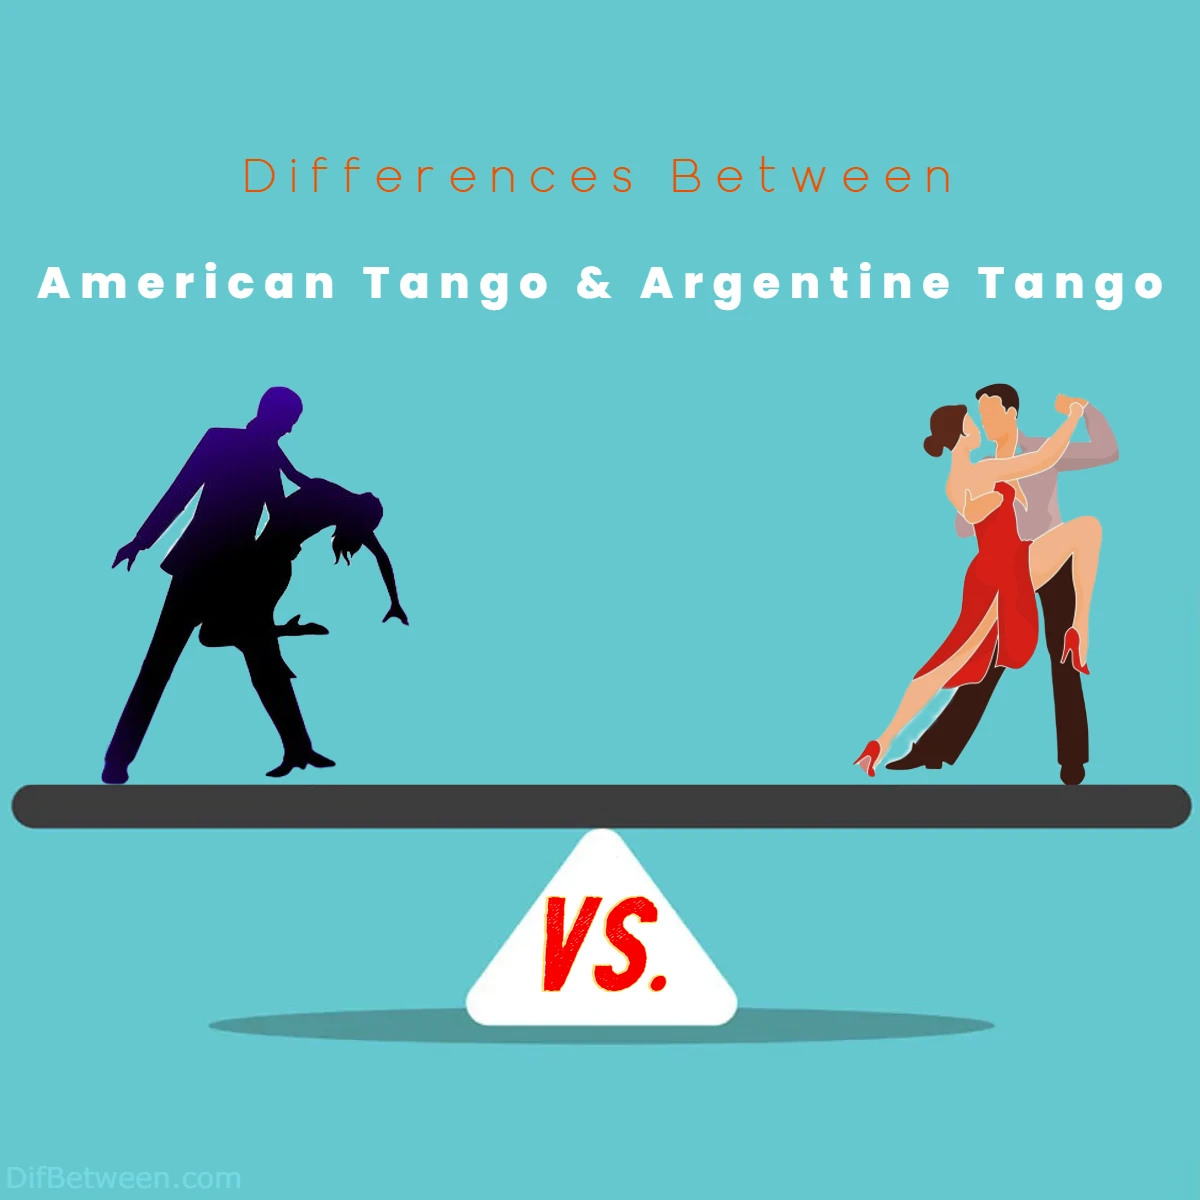 Differences Between American Tango vs Argentine Tango